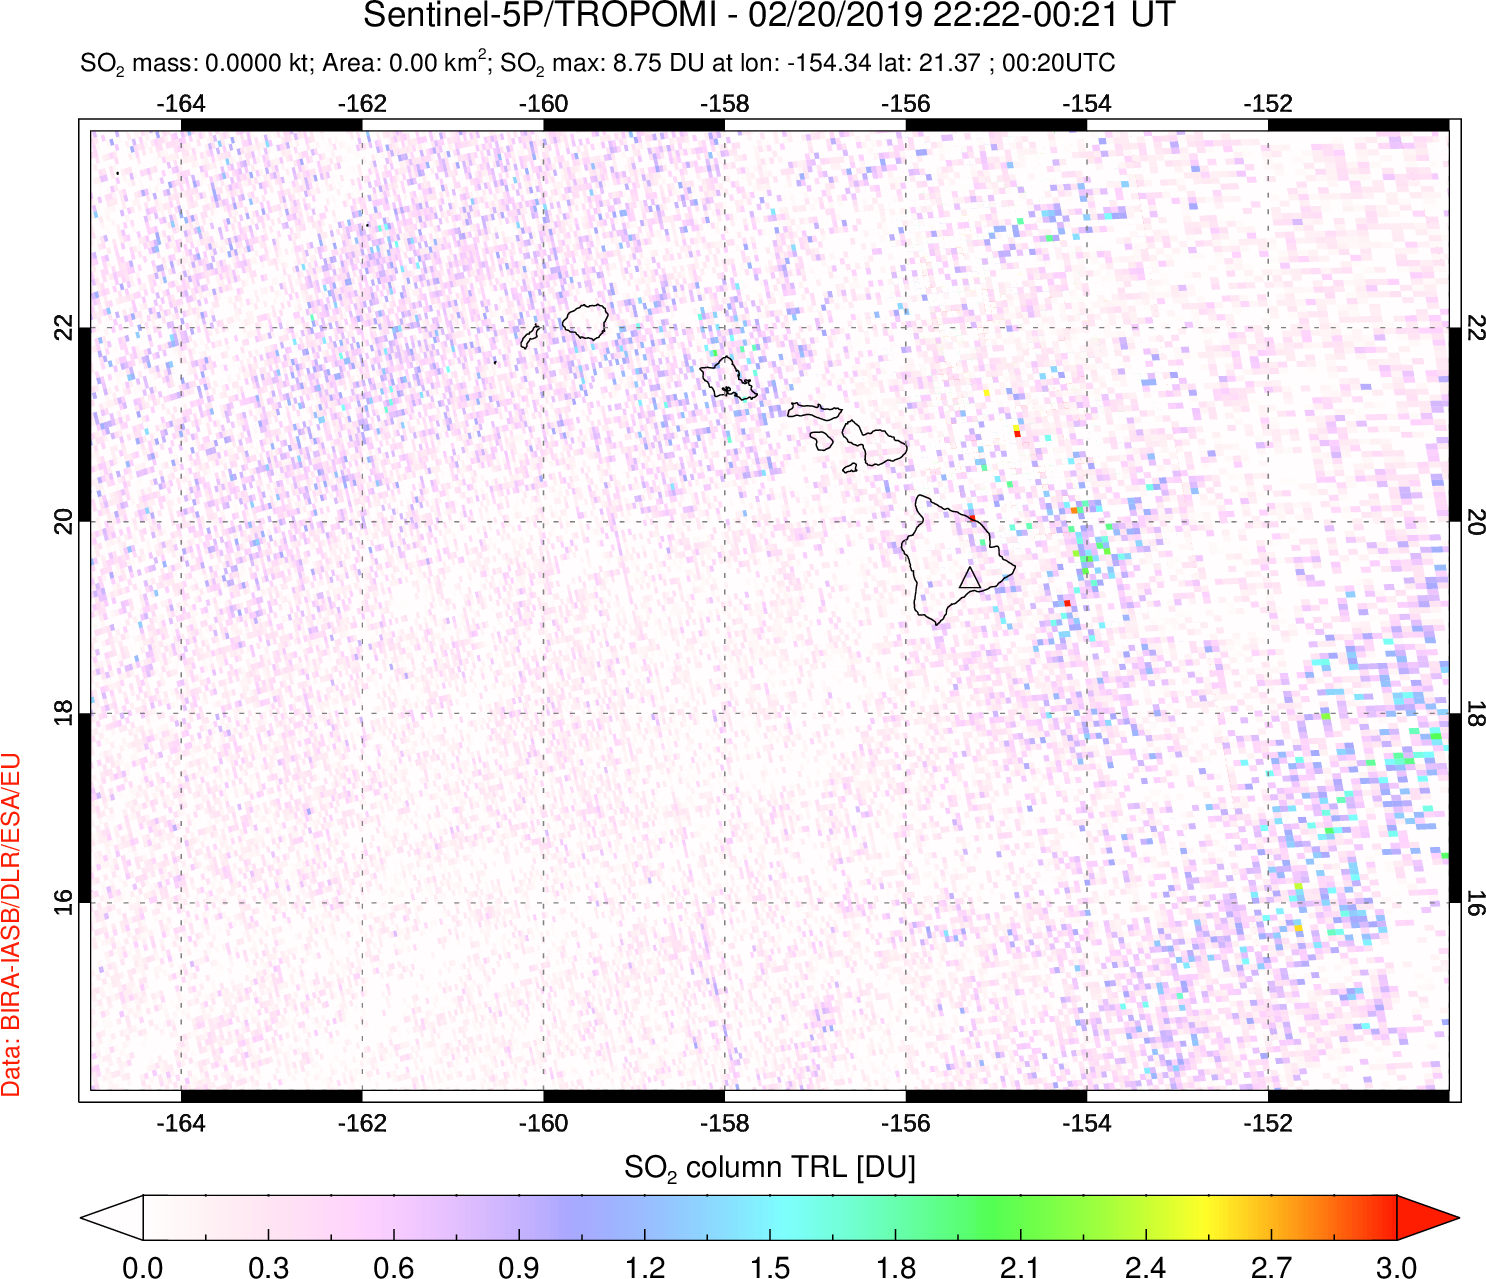 A sulfur dioxide image over Hawaii, USA on Feb 20, 2019.